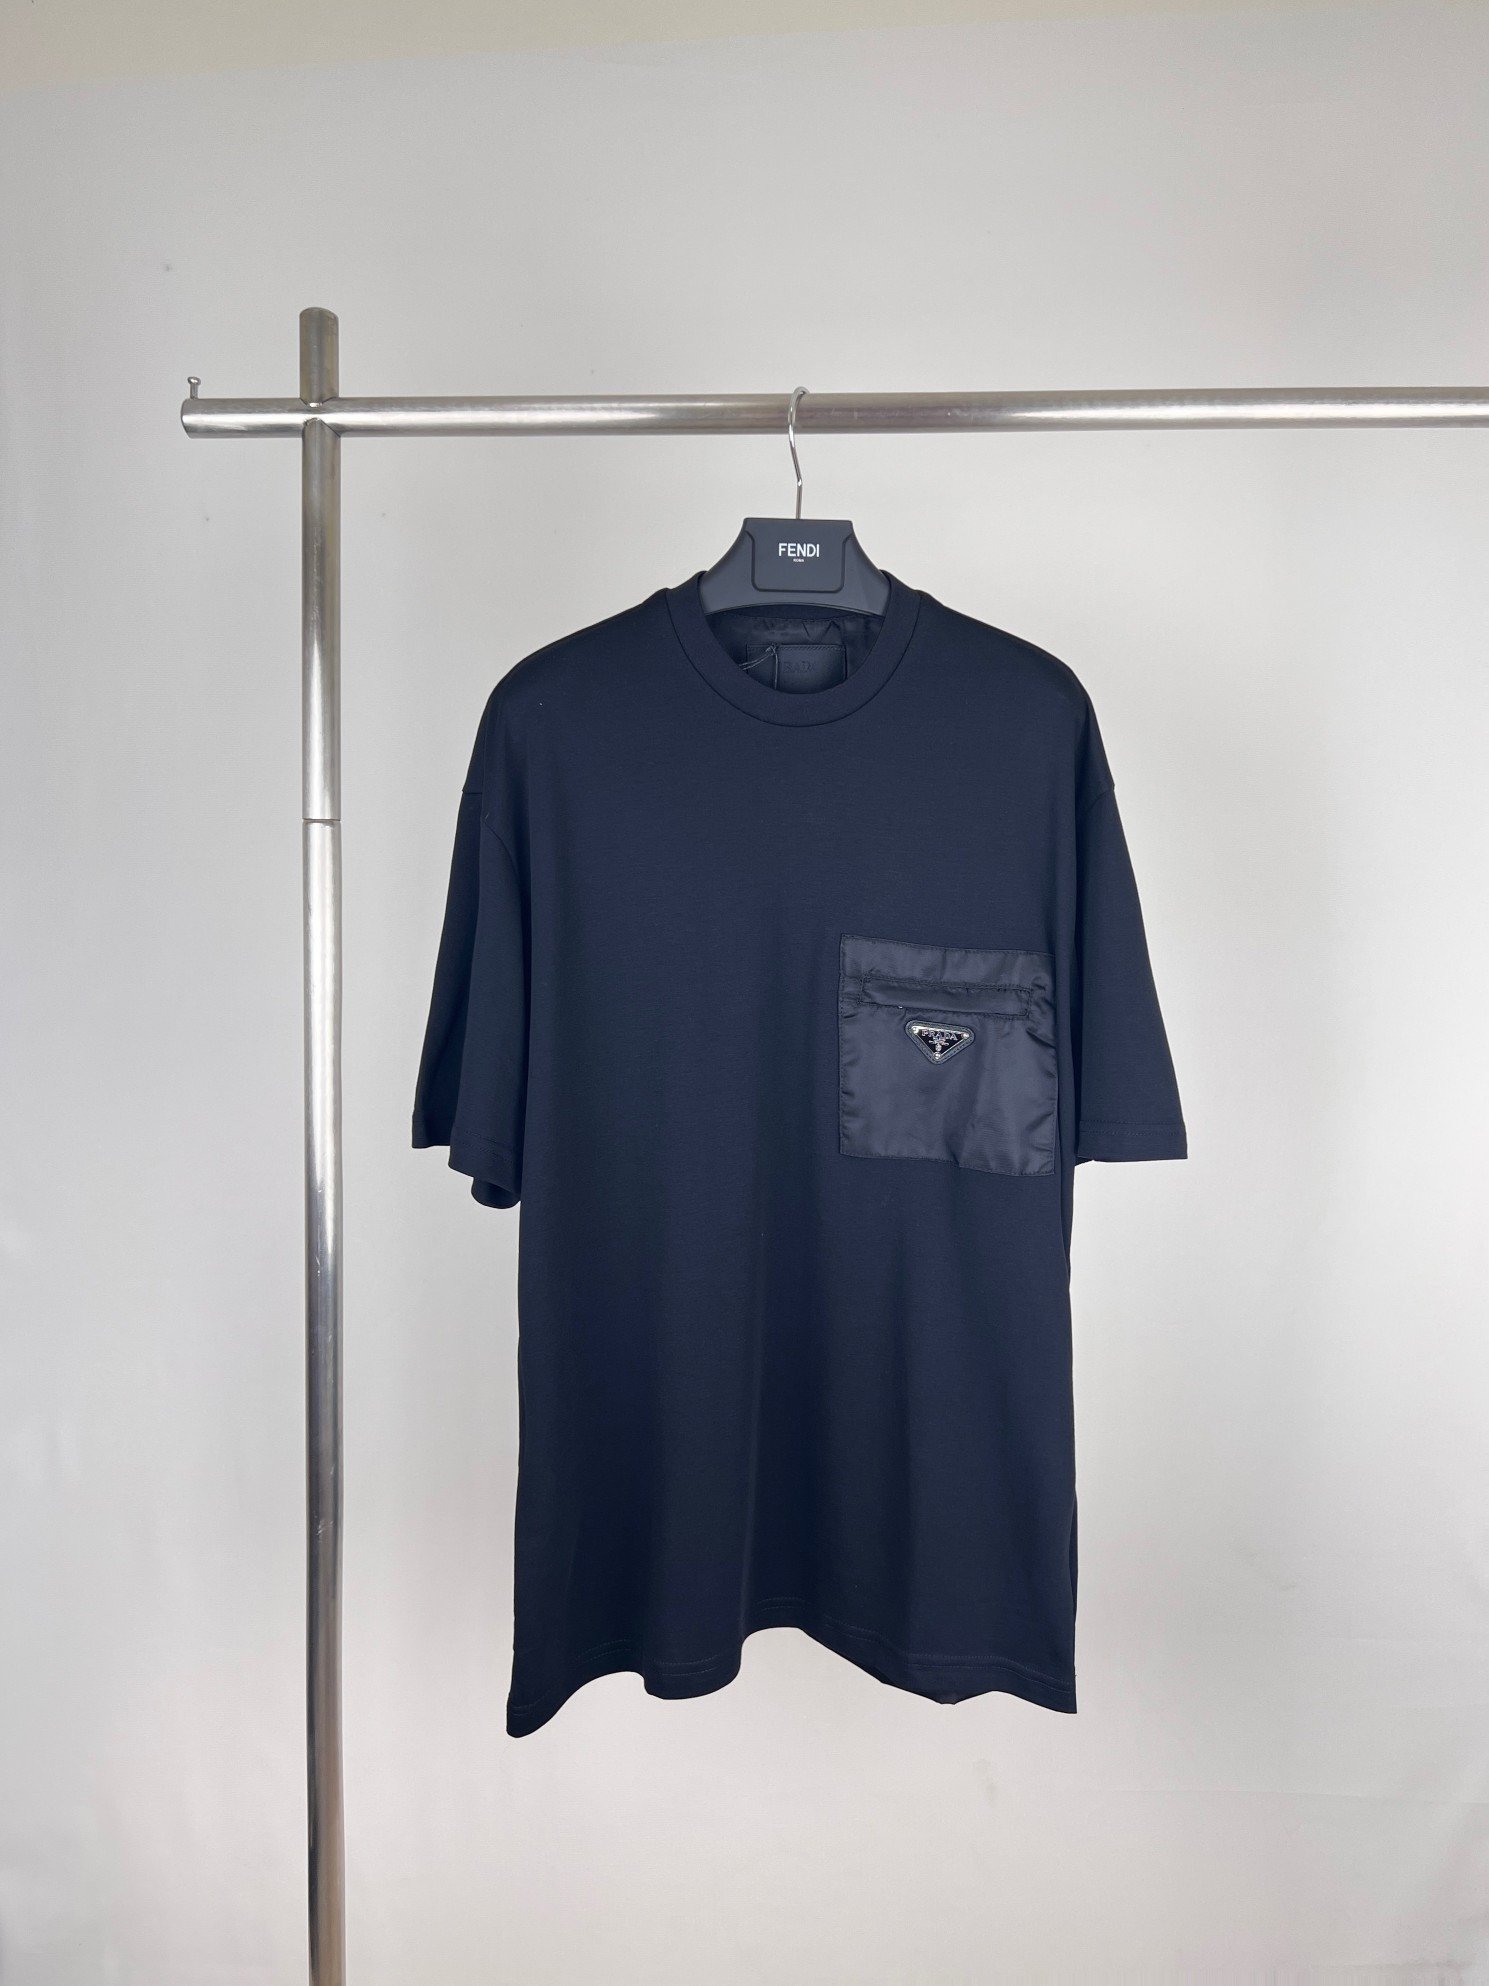 Prada Clothing T-Shirt Splicing Cotton Nylon Short Sleeve